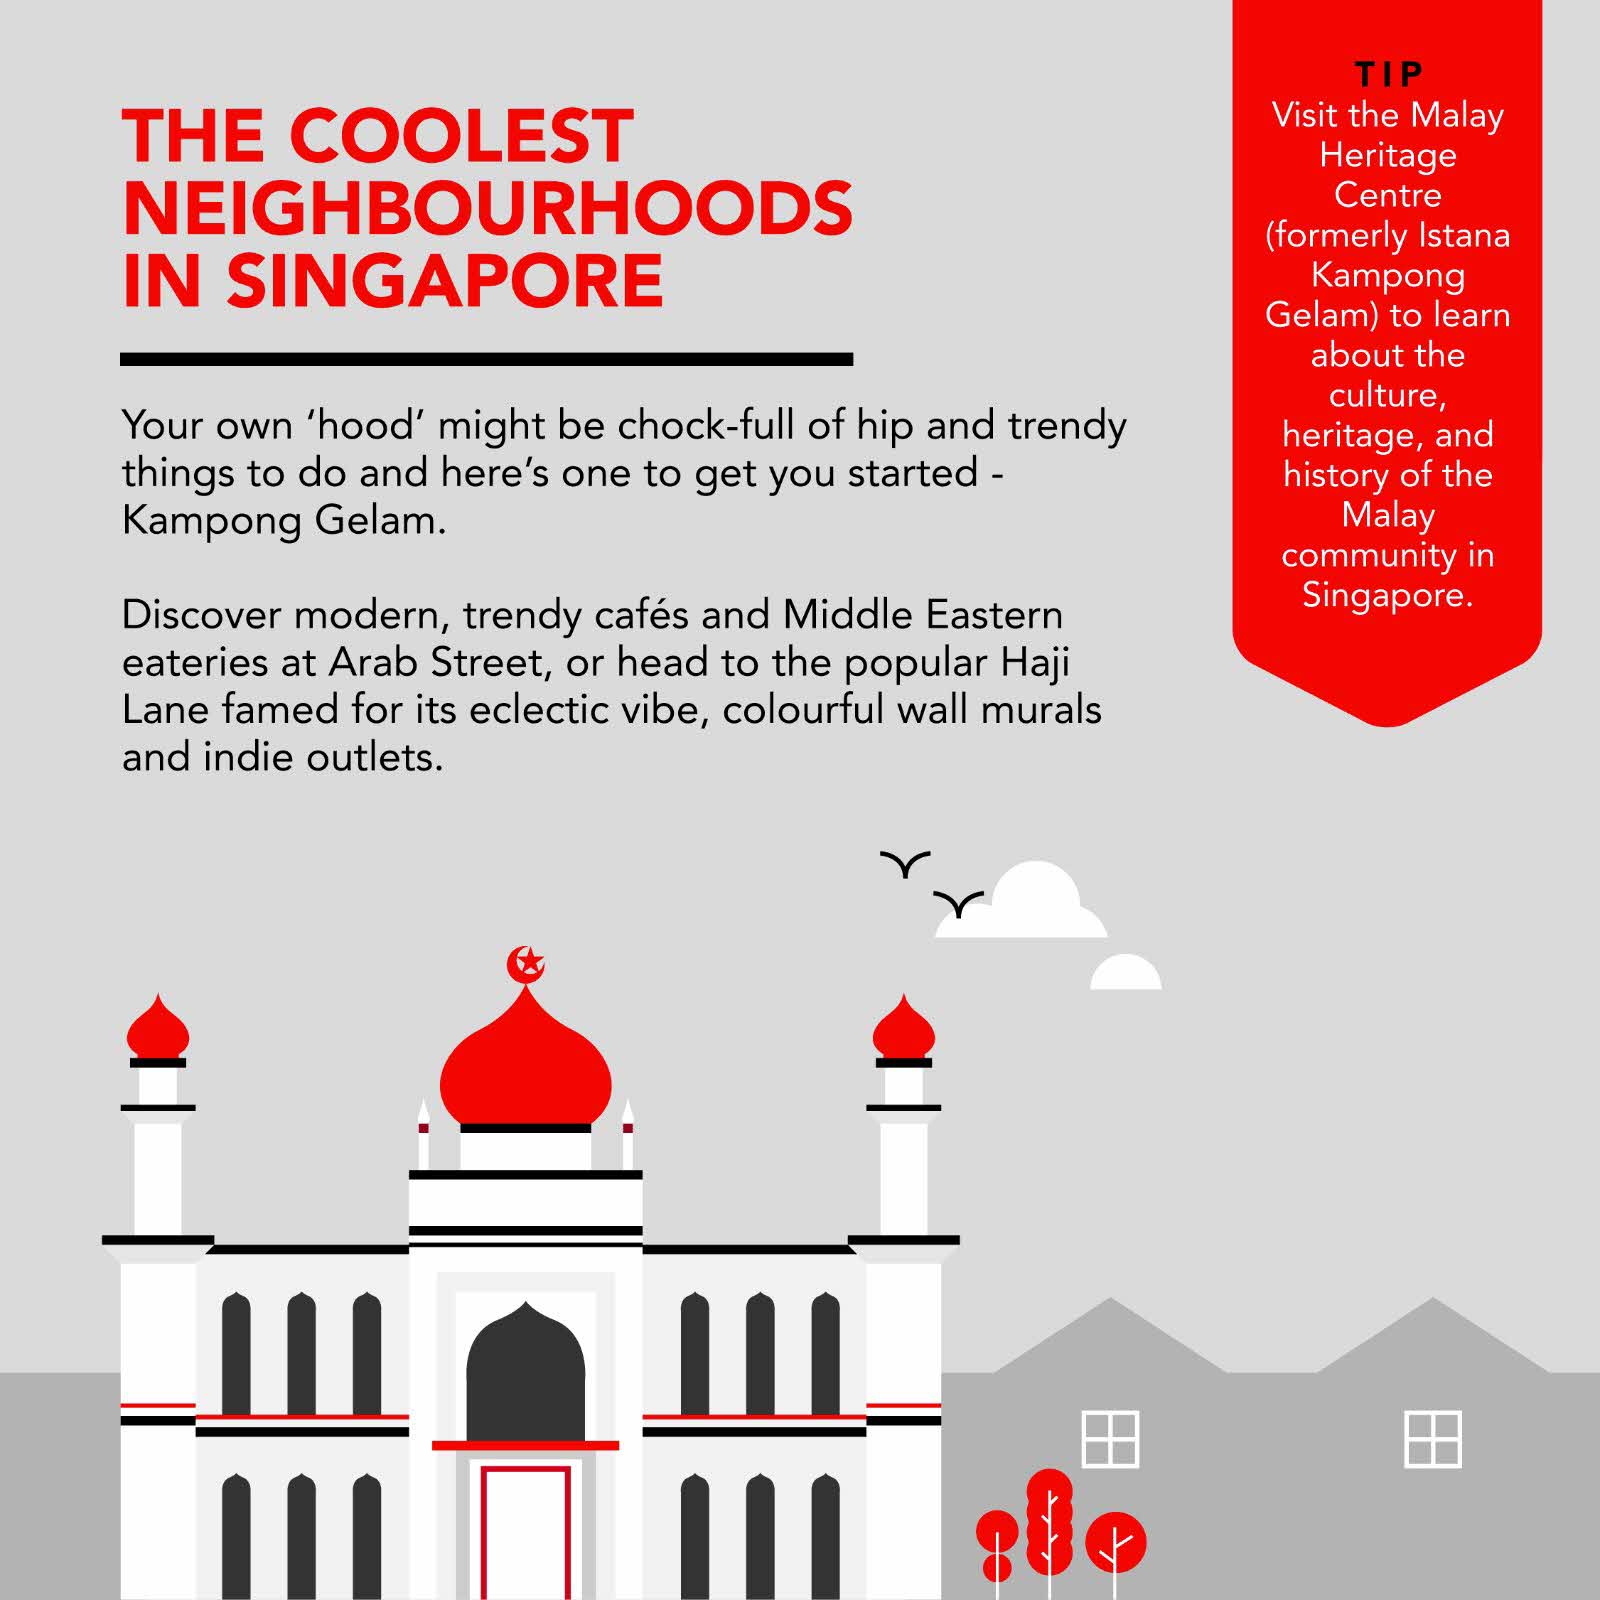 The coolest neighbourhoods in Singapore